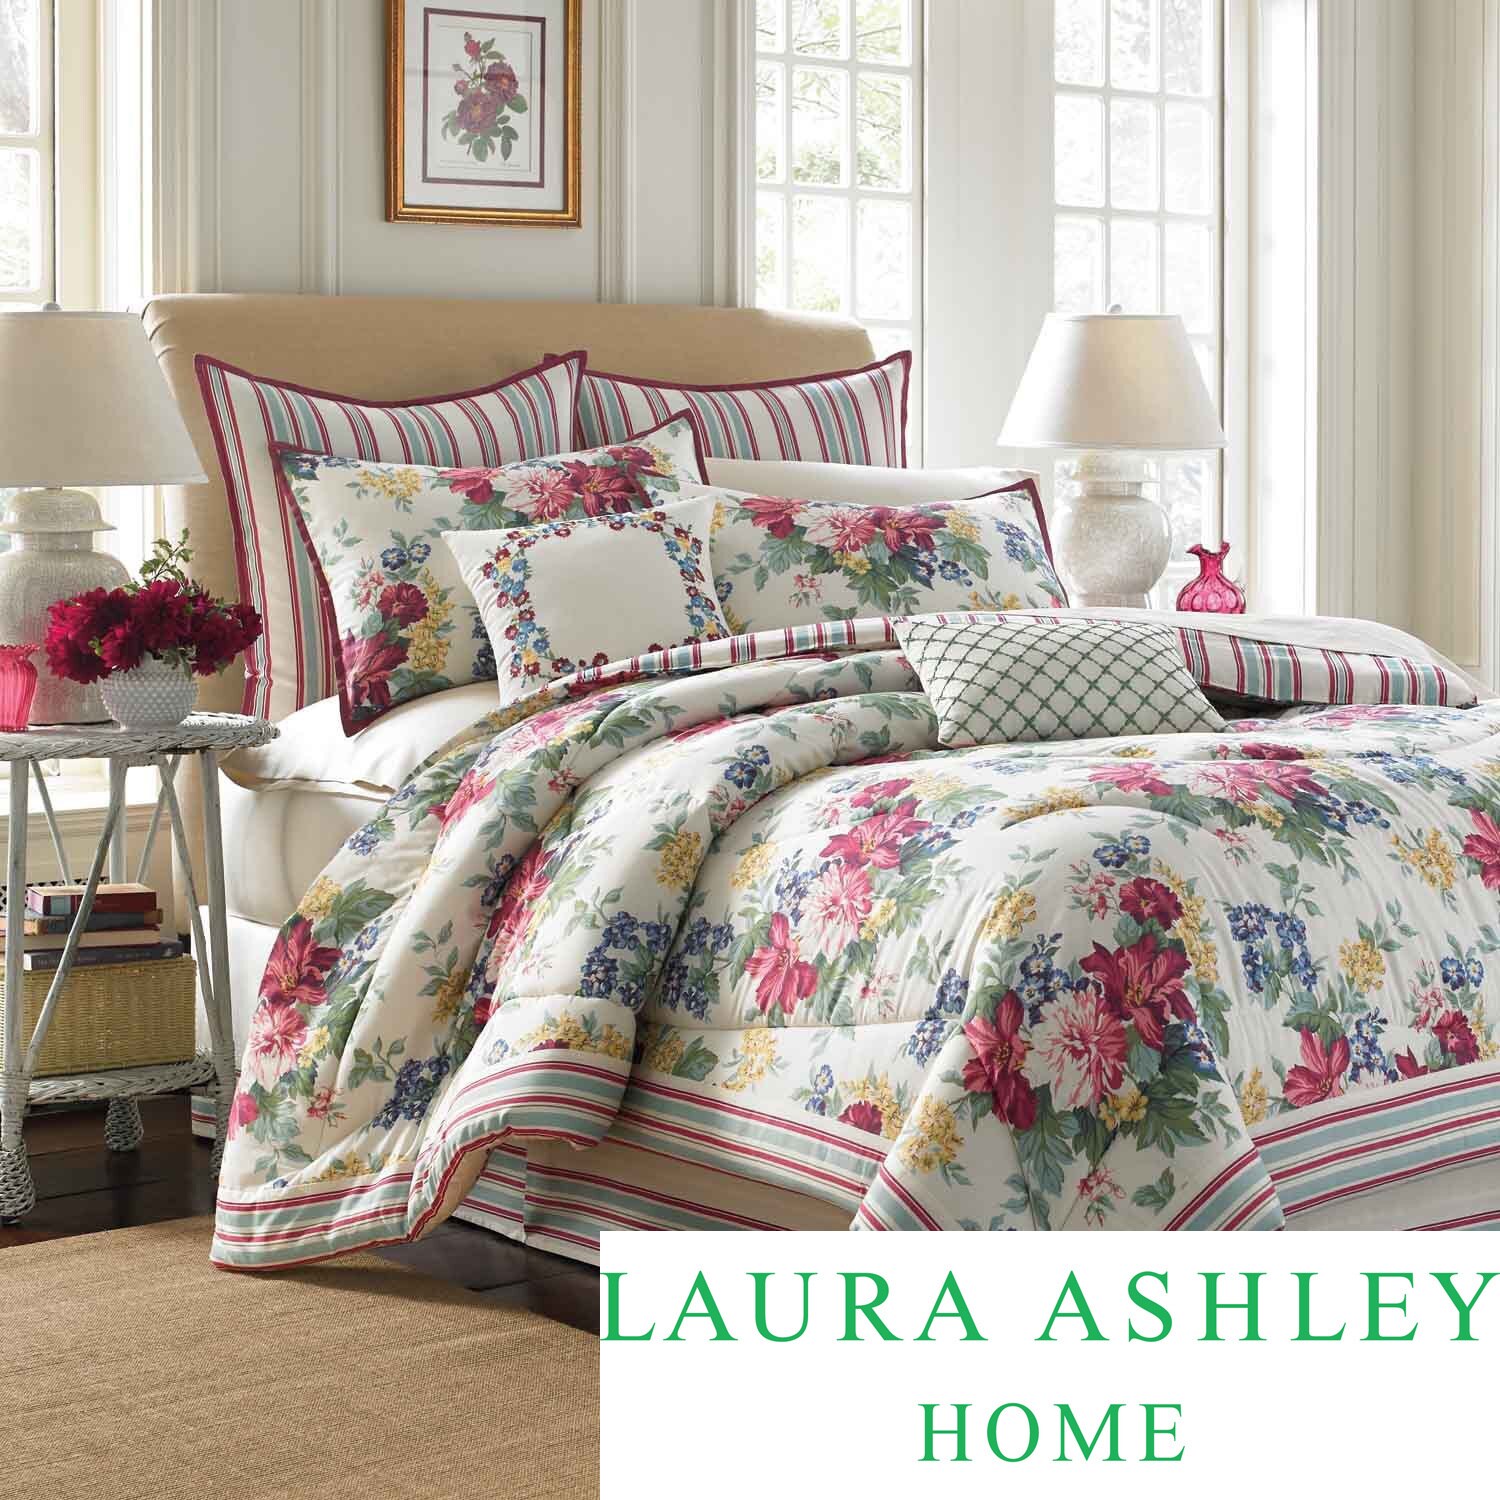 Laura Ashley Melinda 4 piece Comforter Set With European Sham Sold Separately